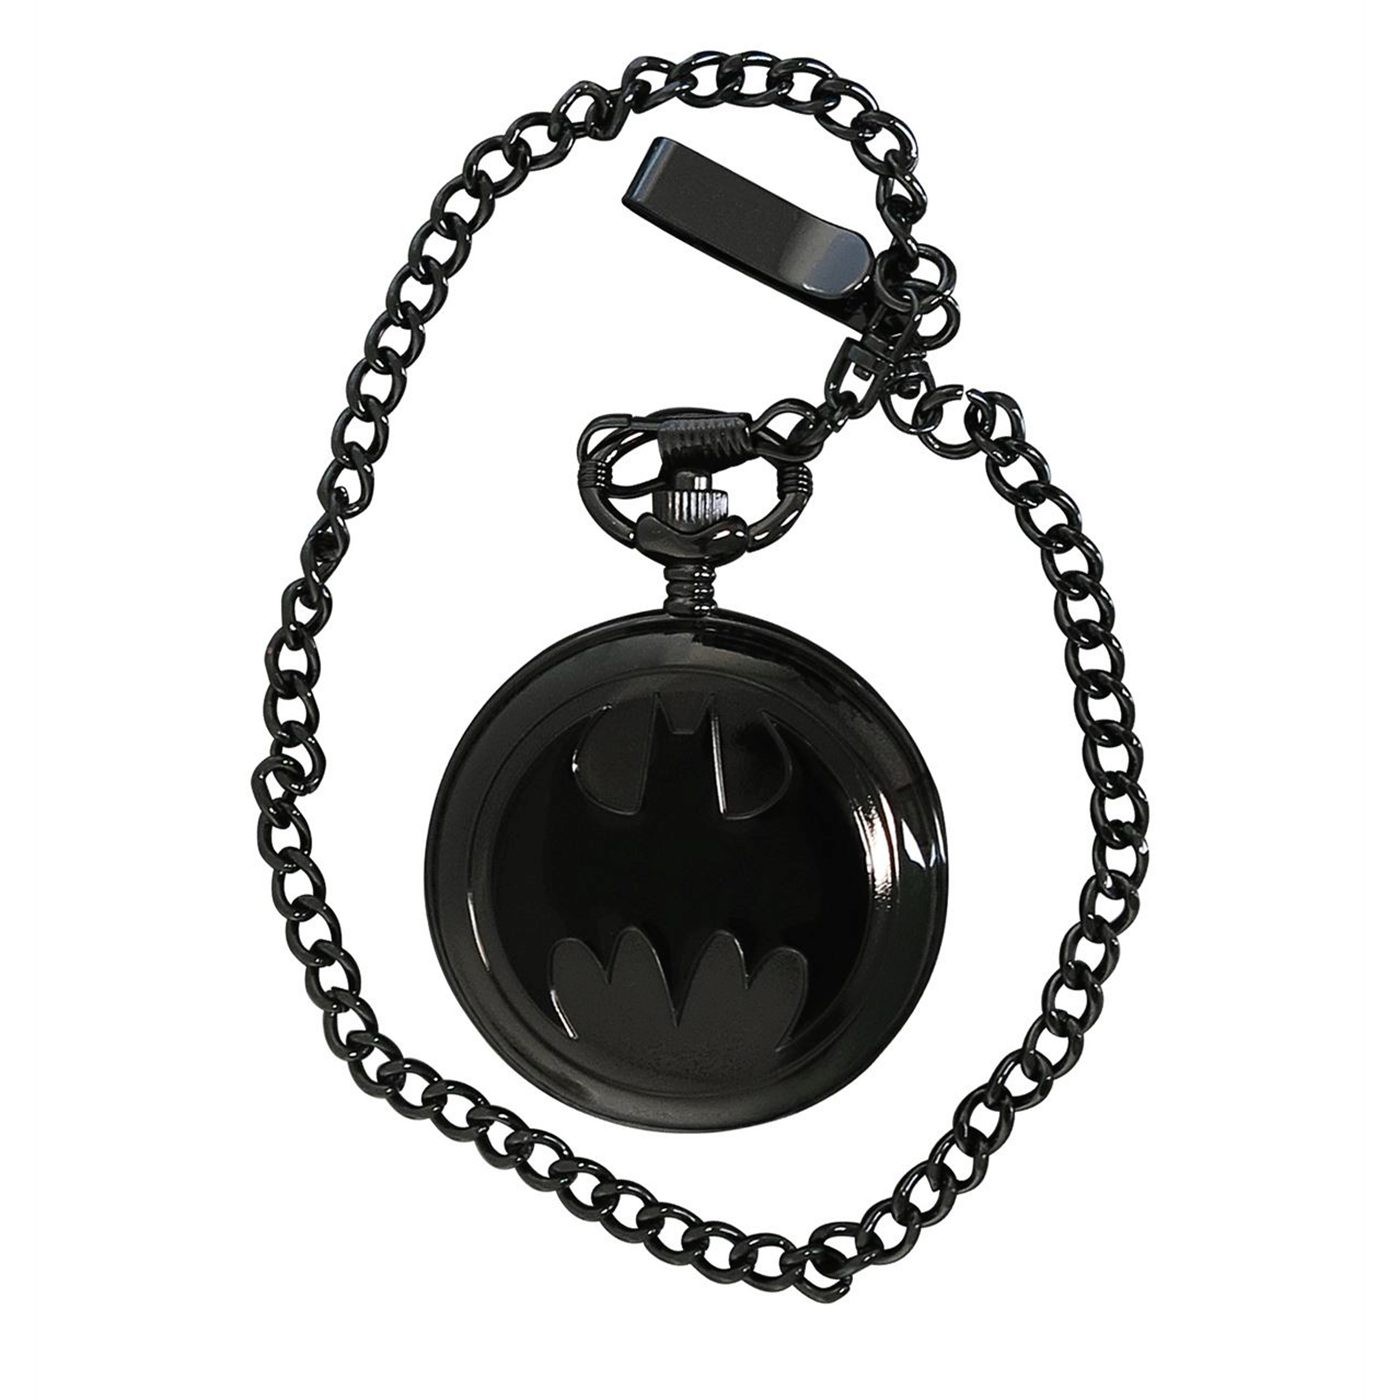 Batman Pocket Watch